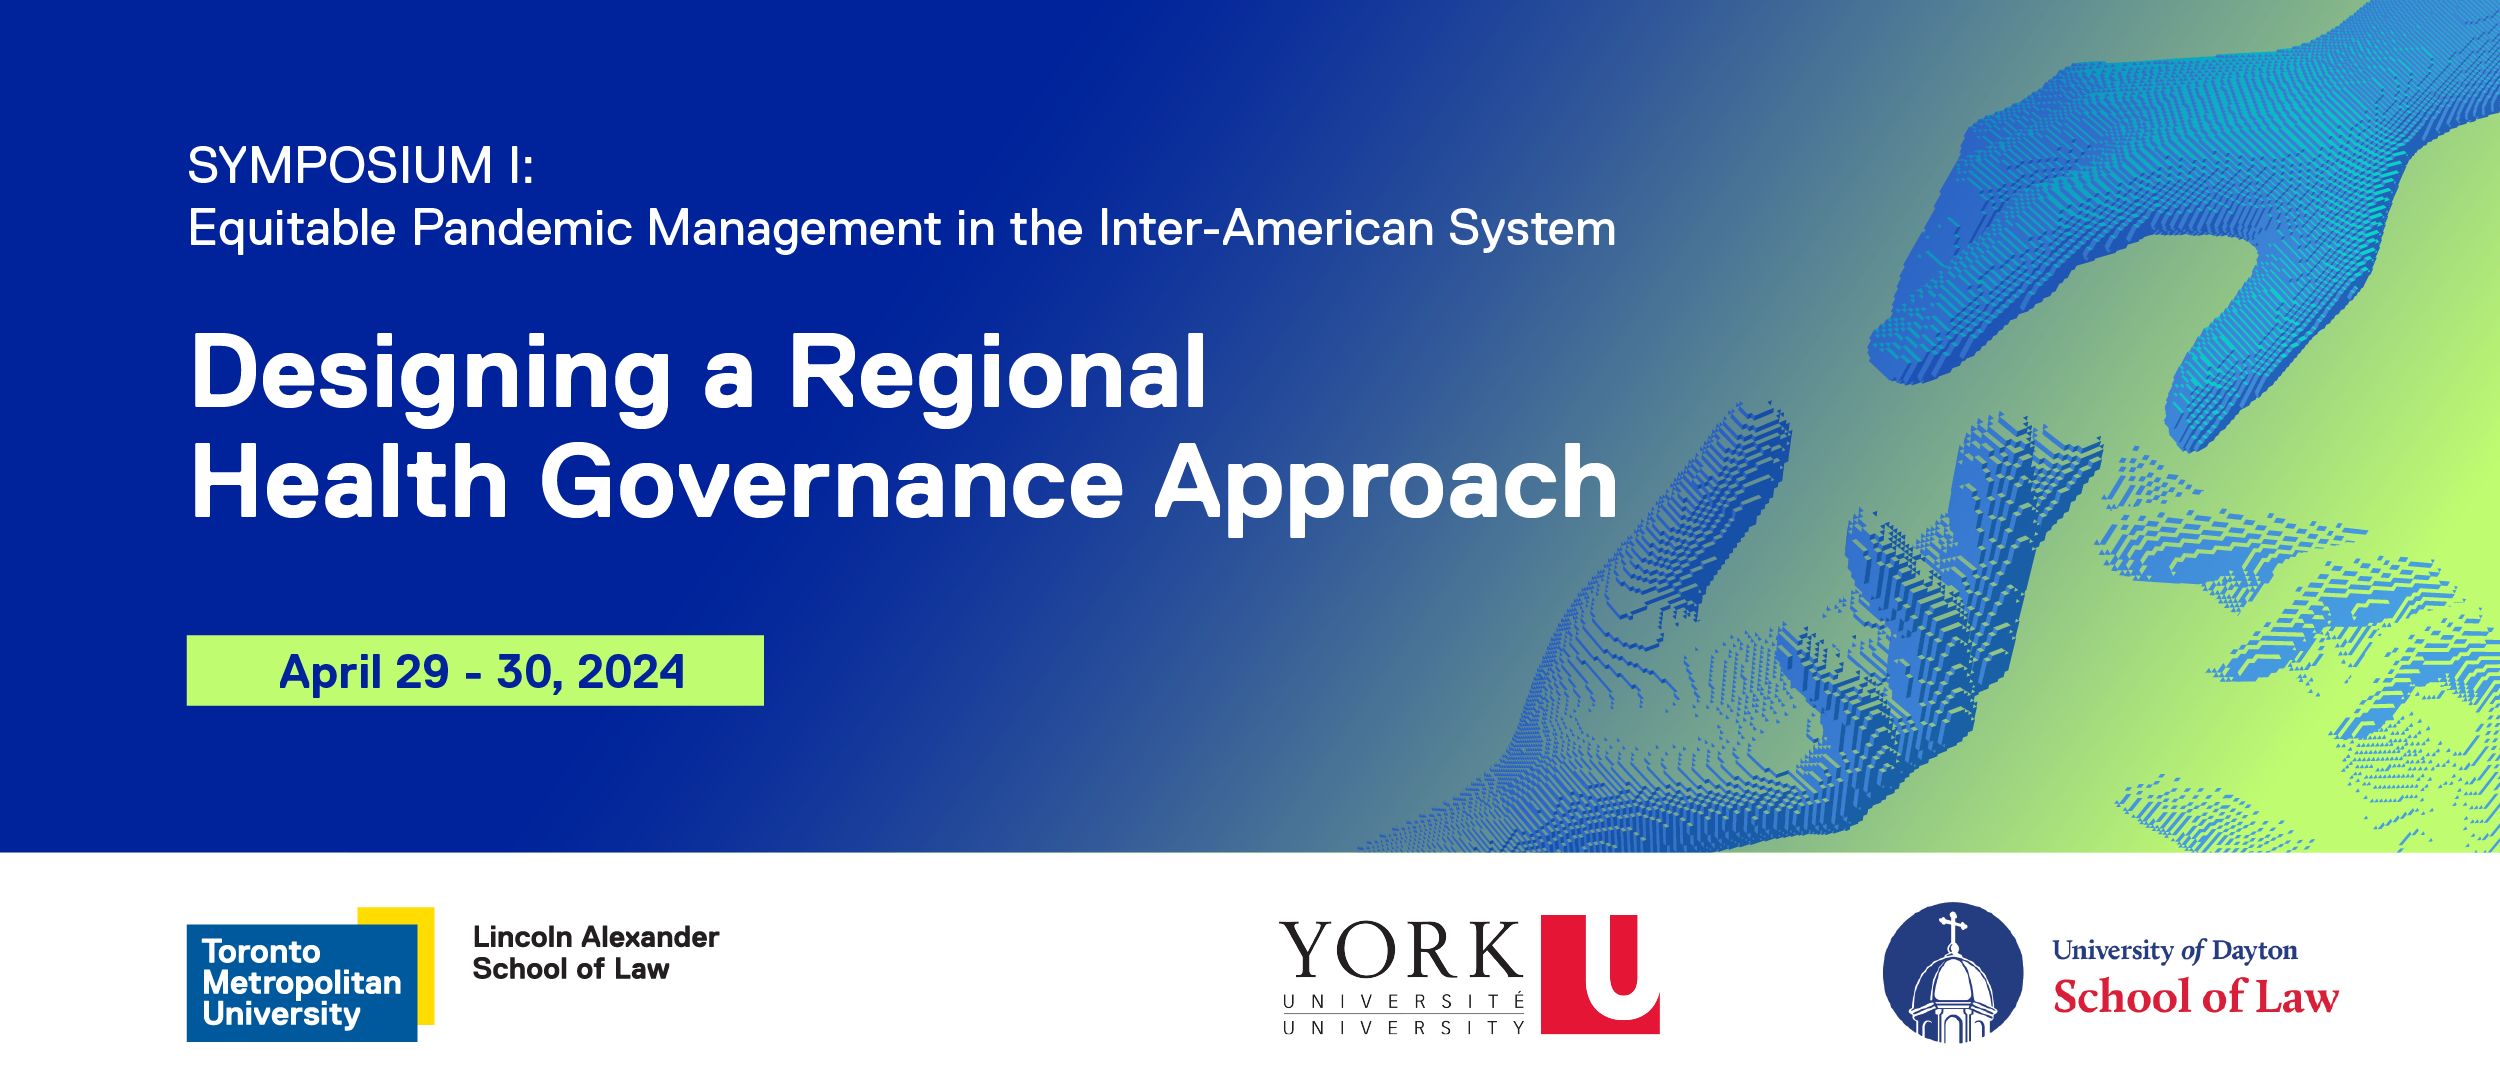 Designing a Regional Health Governance Approach symposium